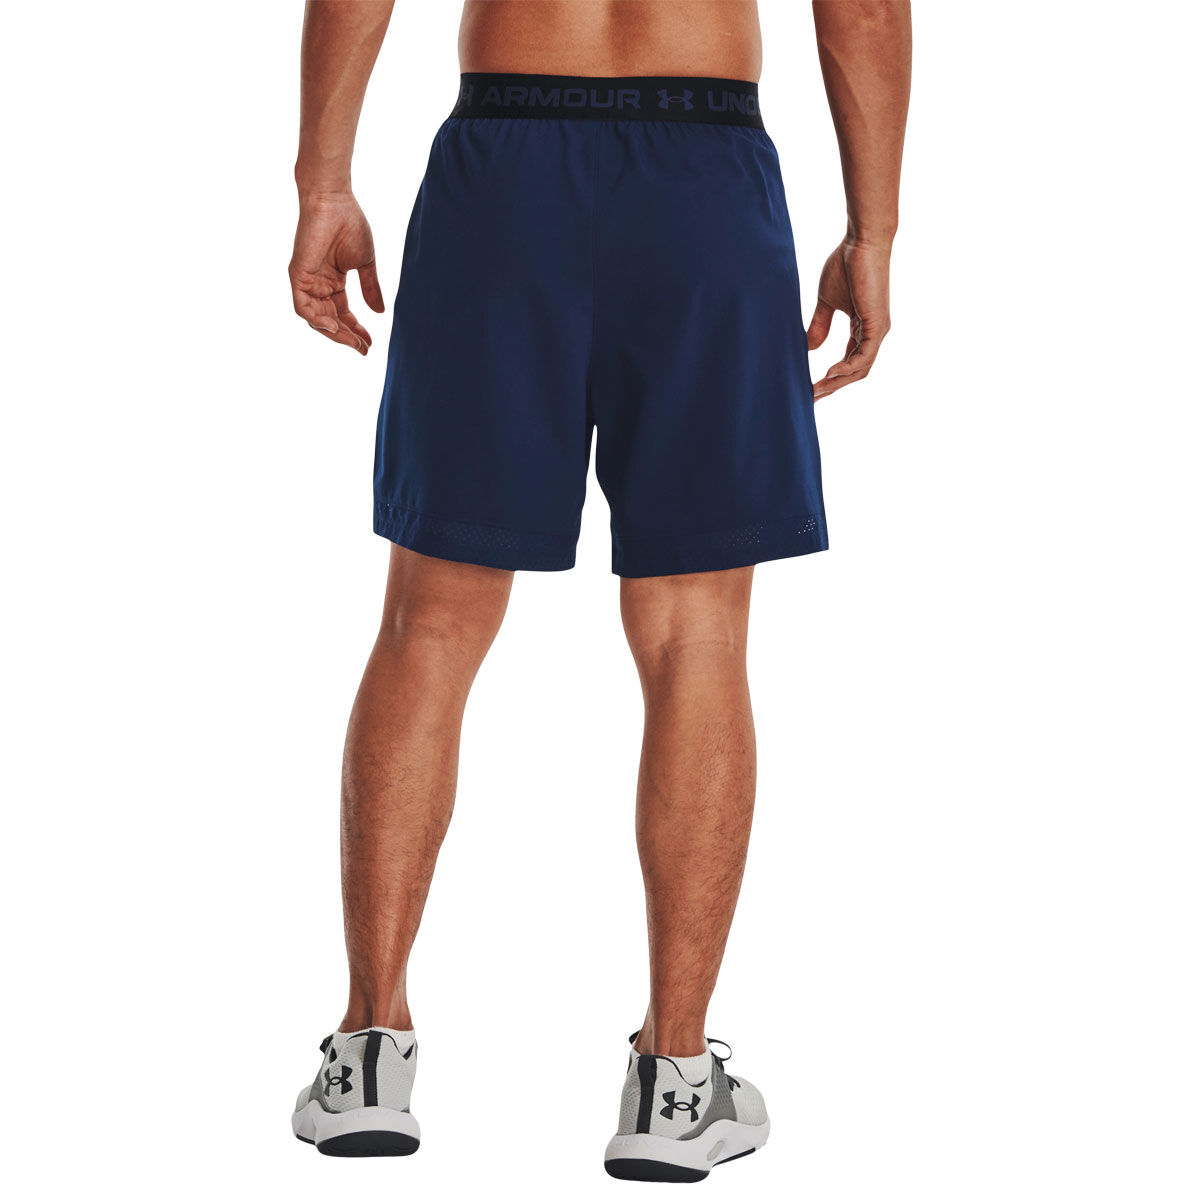 Under Armour Men's Shorts - Gym & Running Shorts - rebel